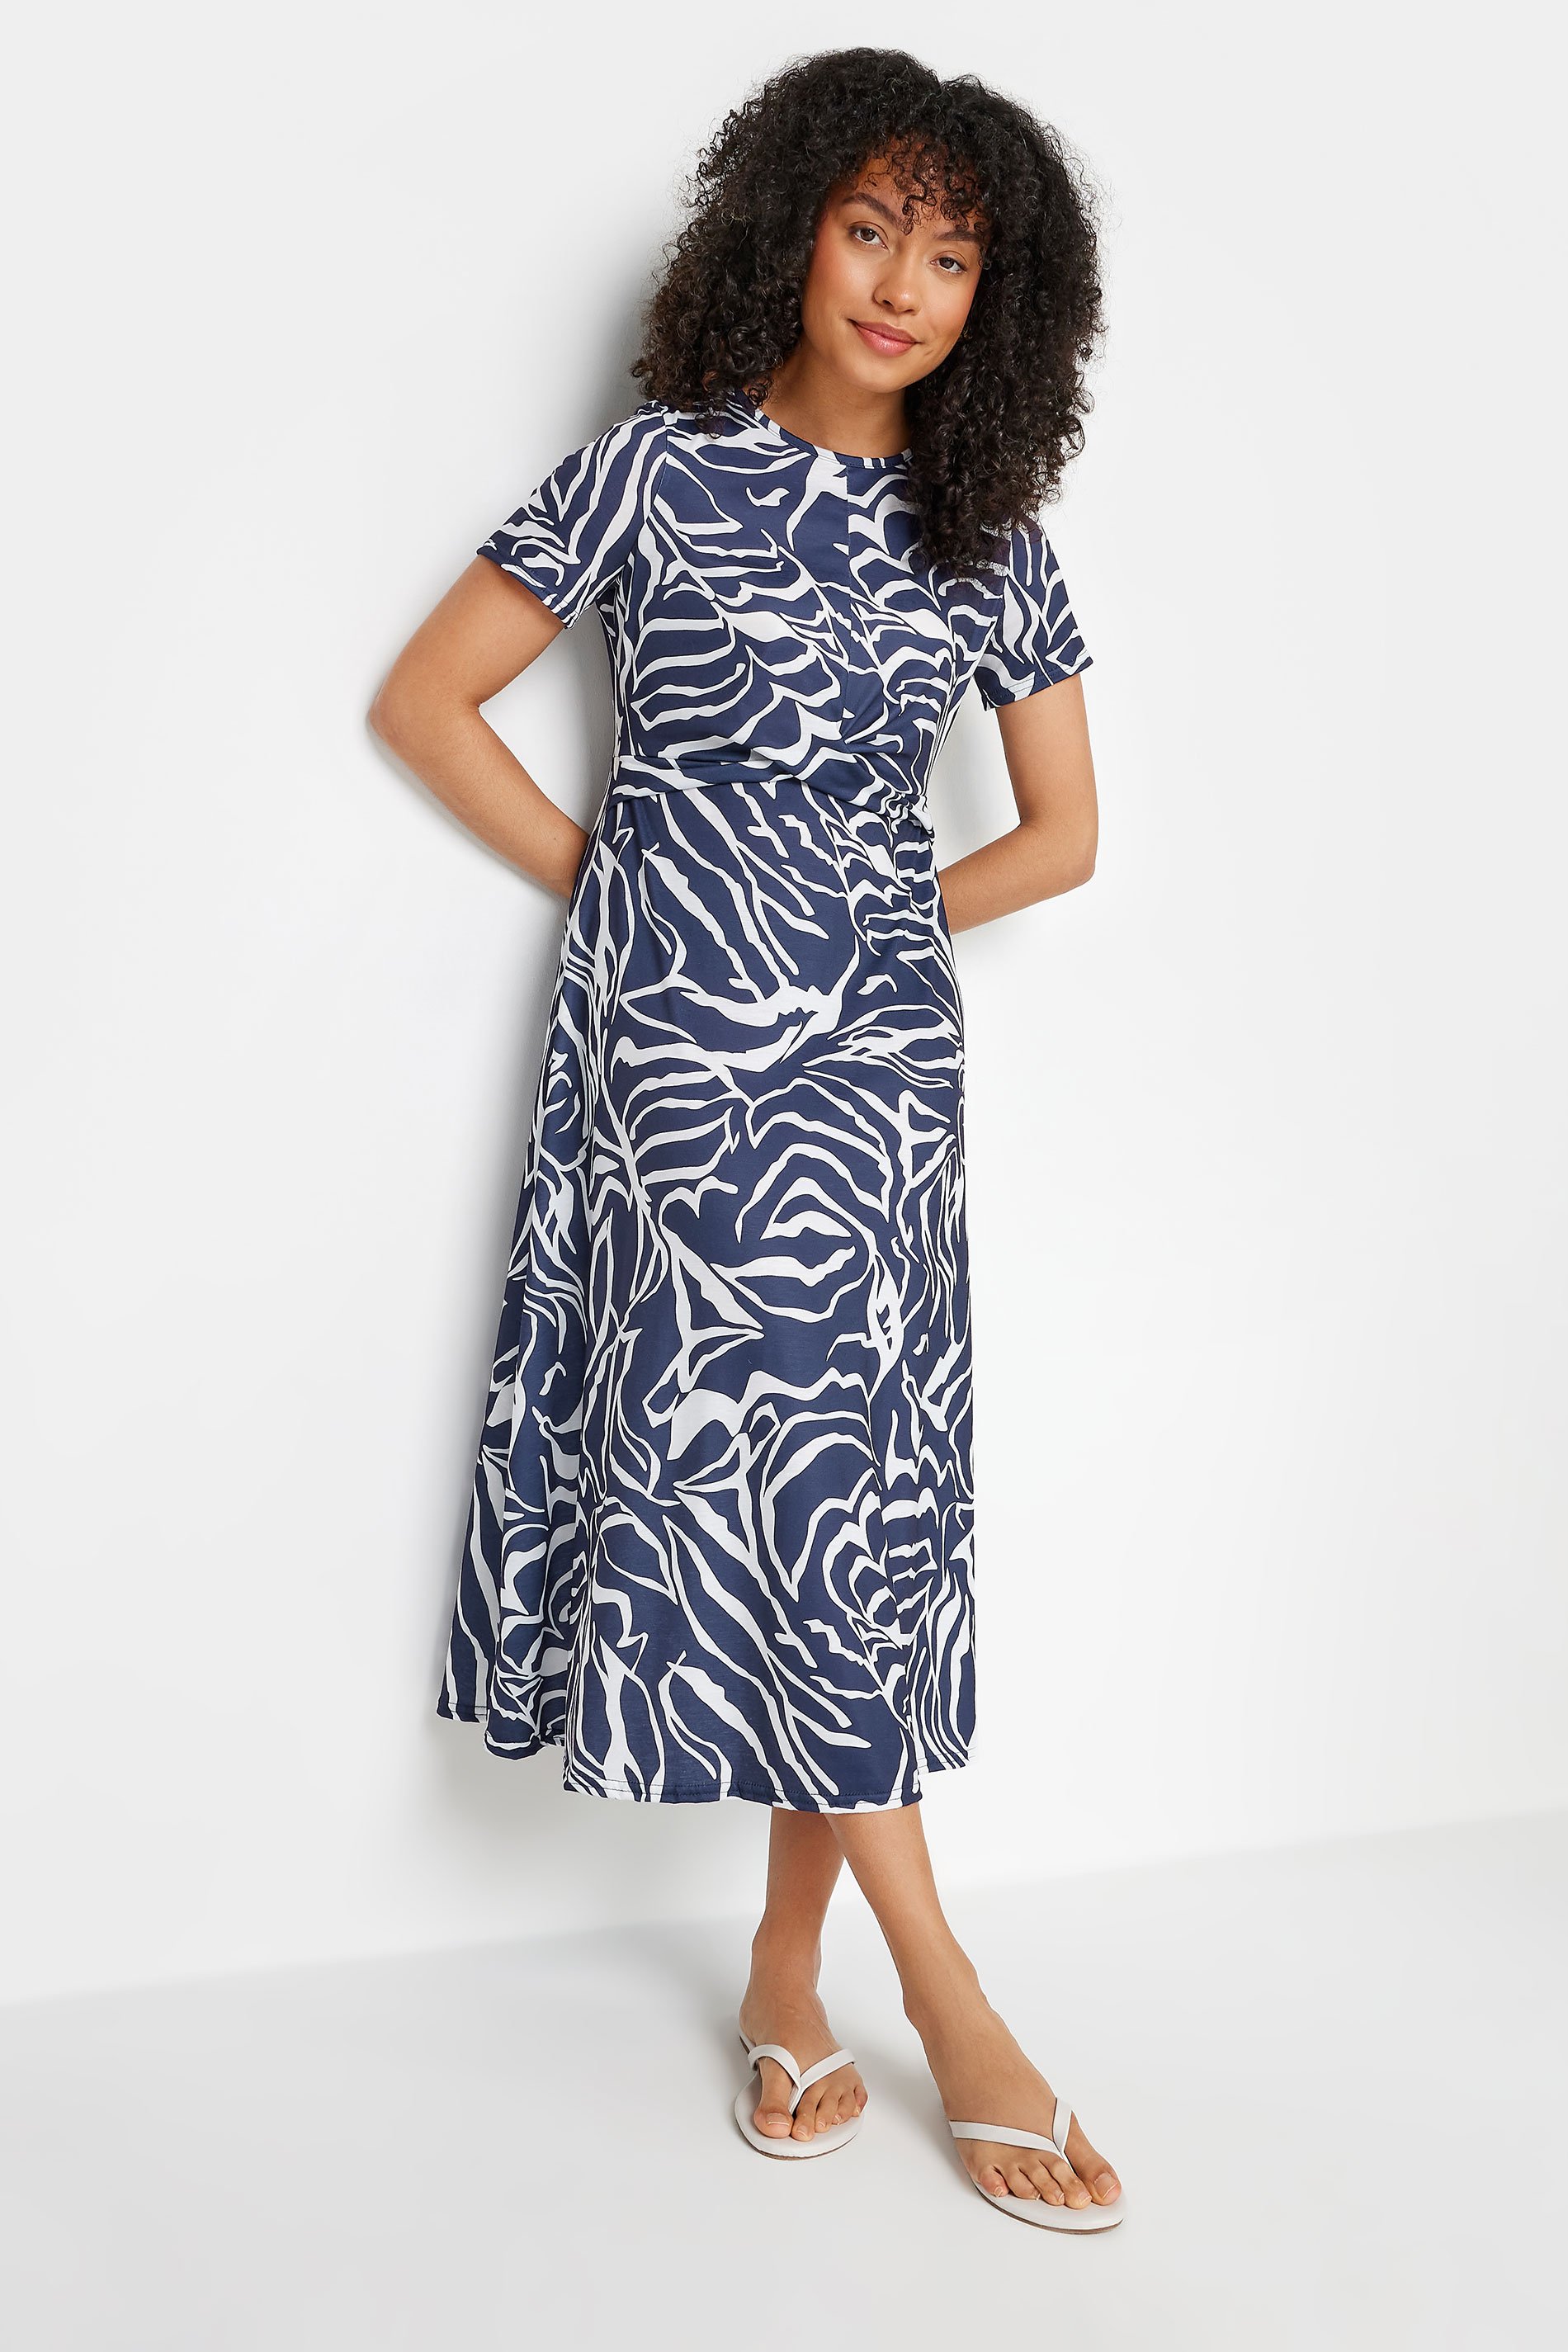 M&Co Navy Blue & White Abstract Print Short Sleeve Midi Dress | M&Co 2